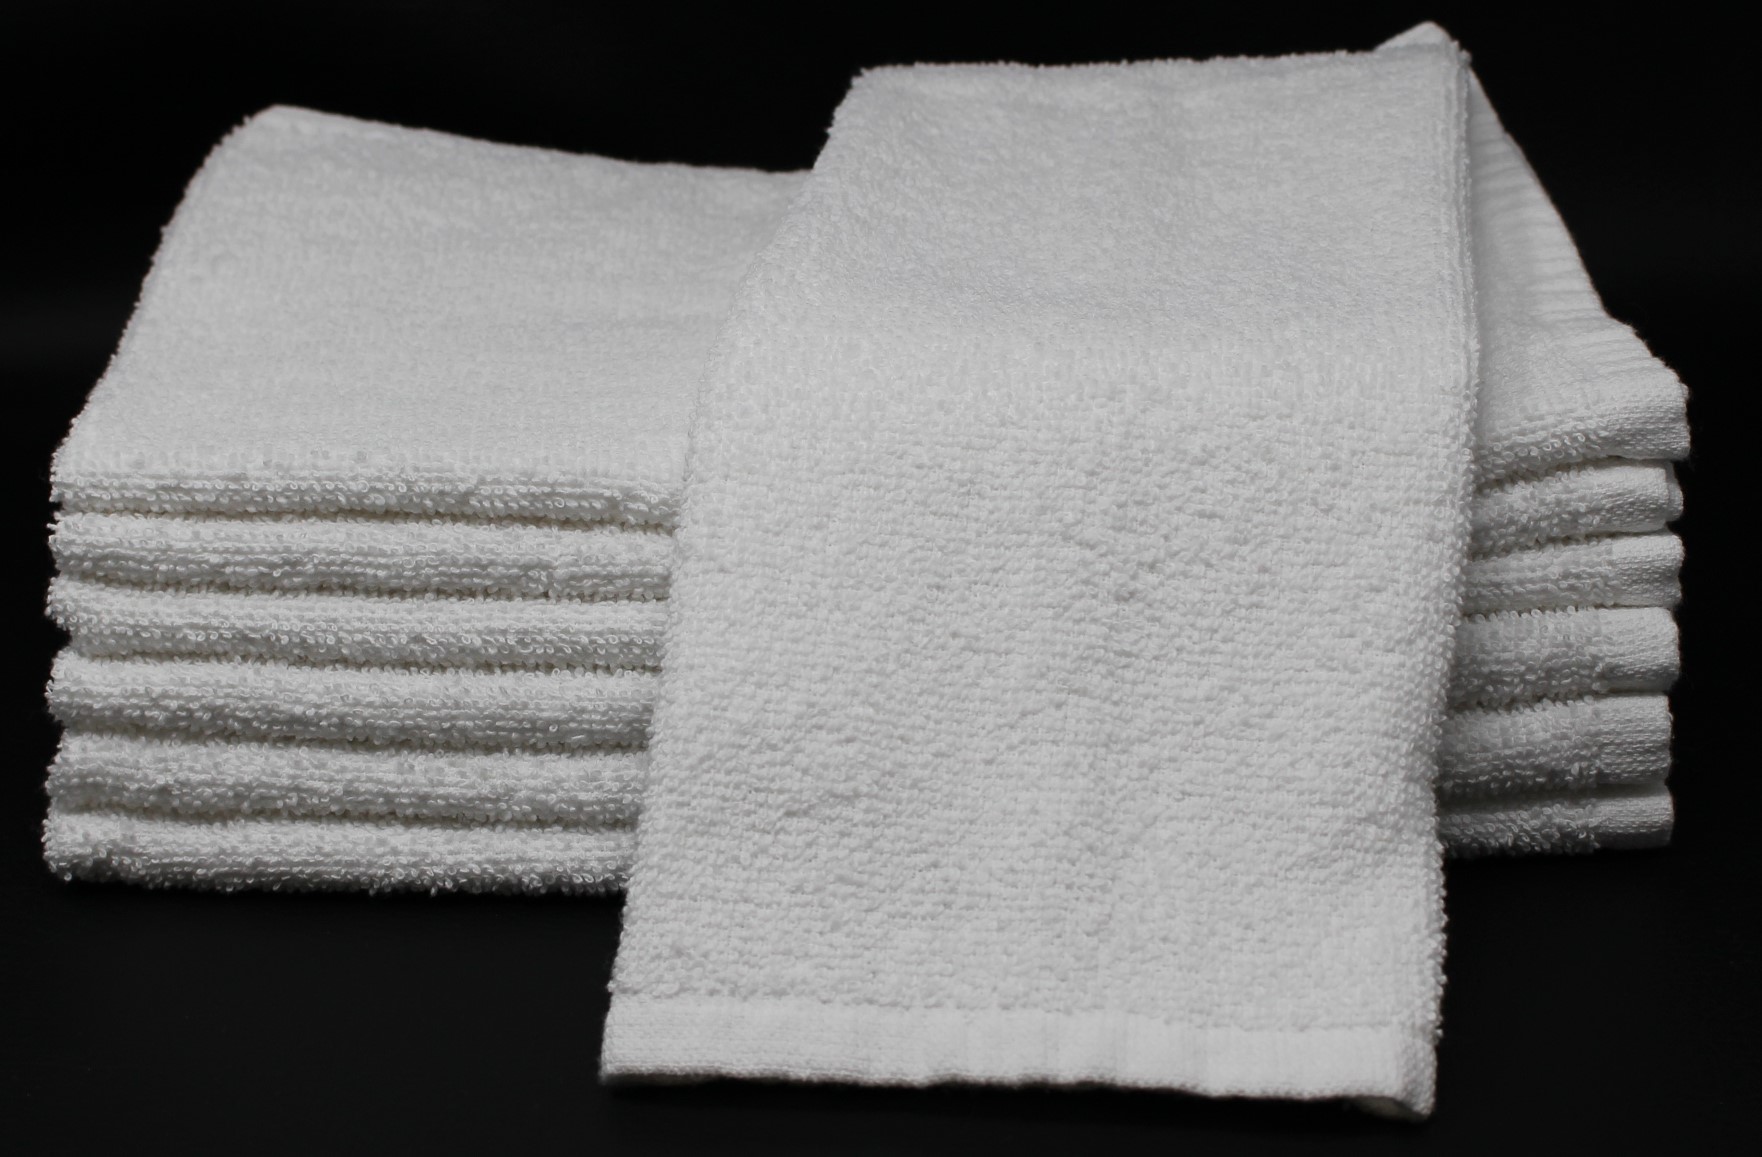 Bulk Premium Black Hand Towels, 16x27